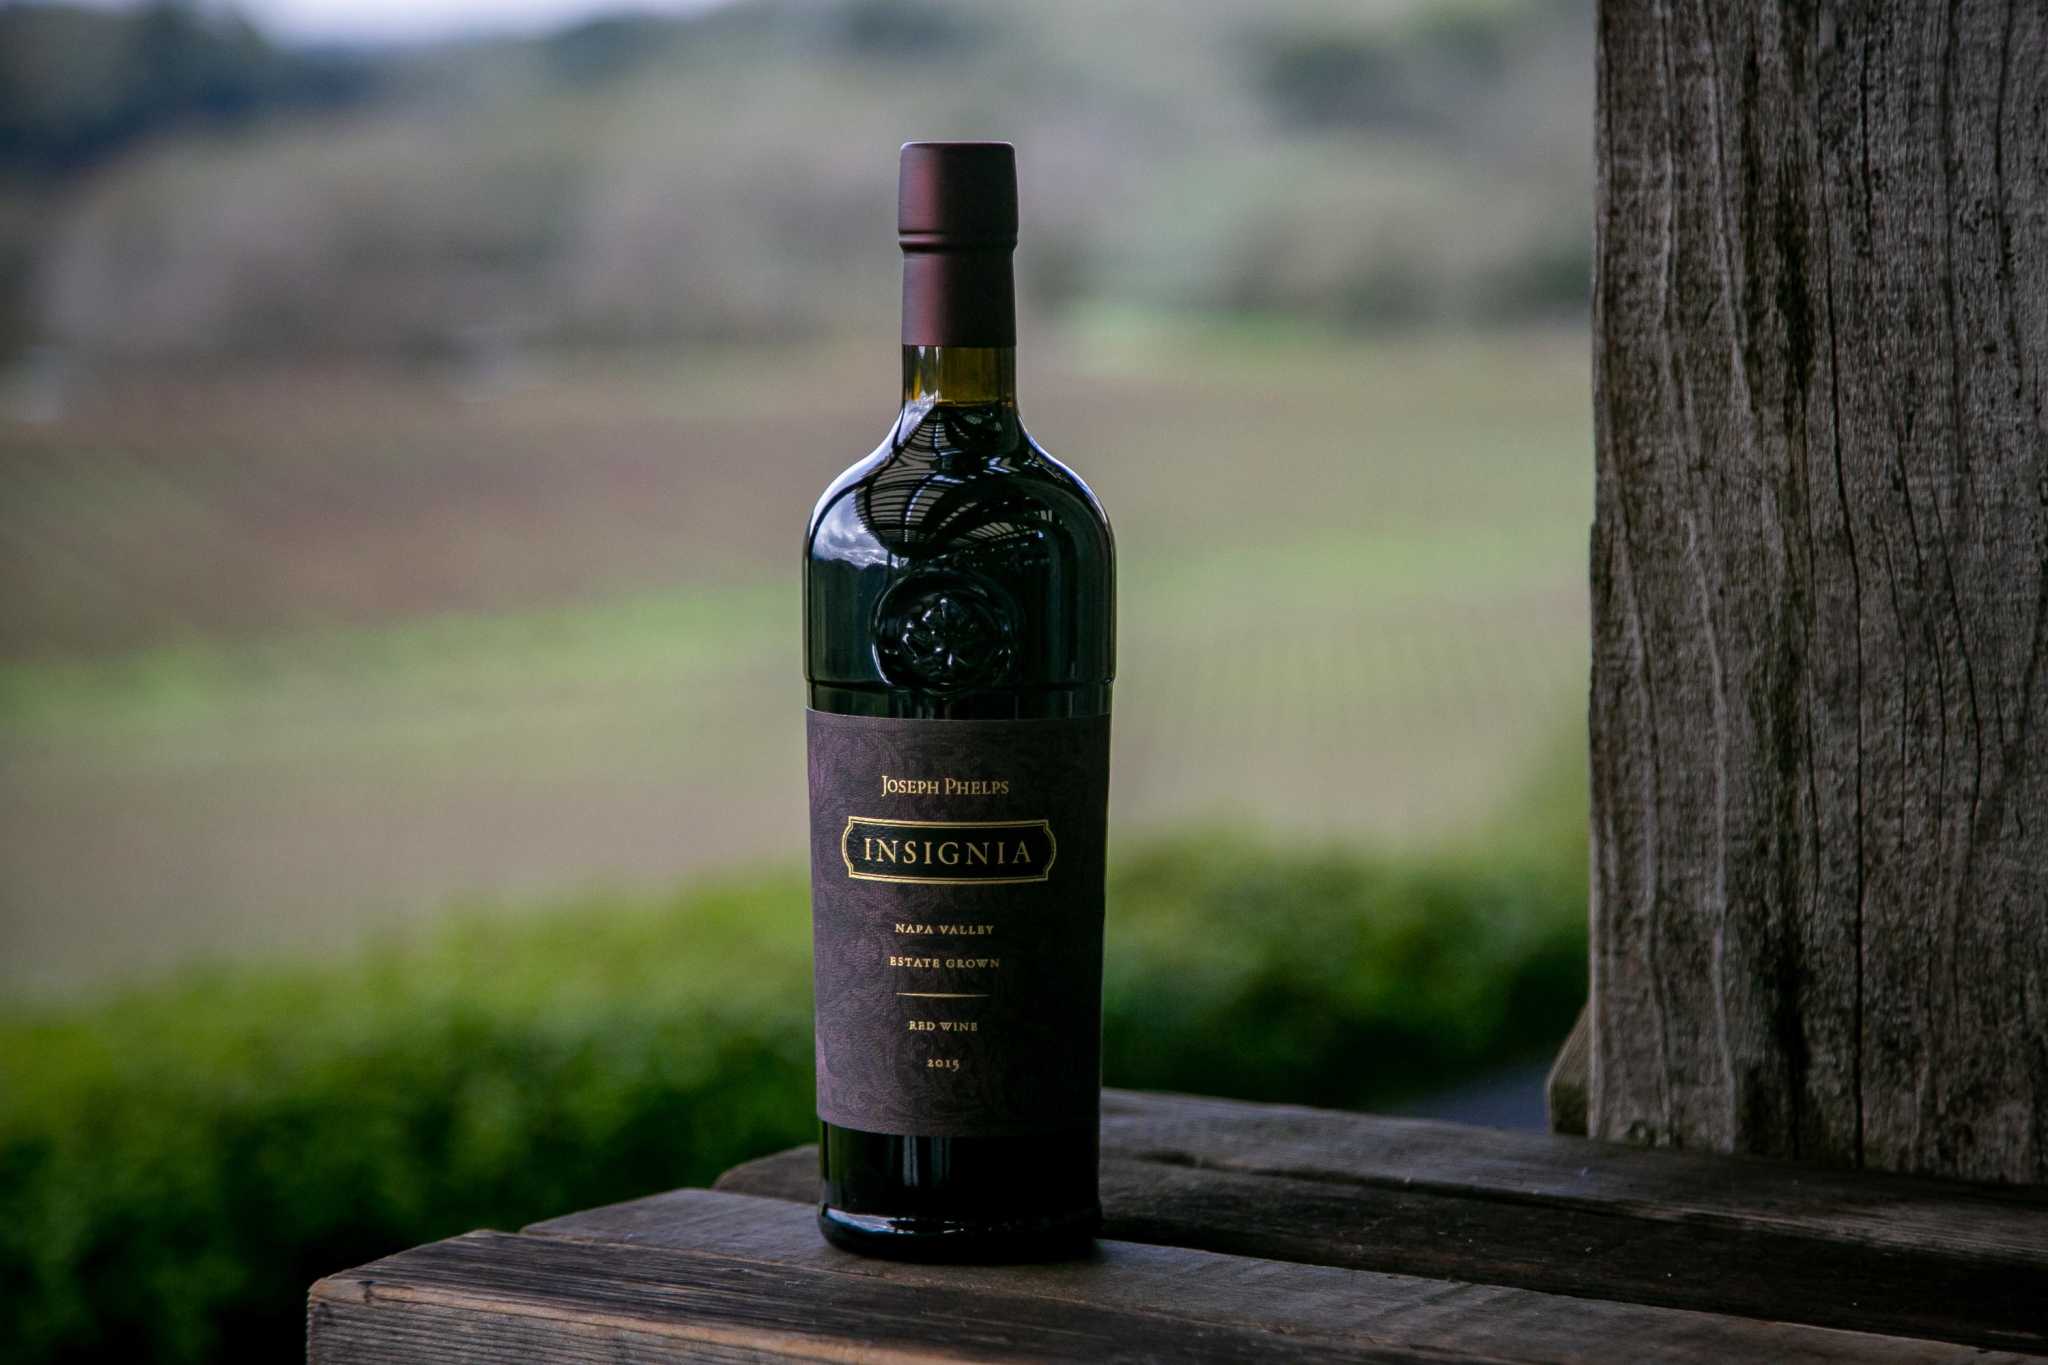 Domaine Chandon - The Napa Wine Project